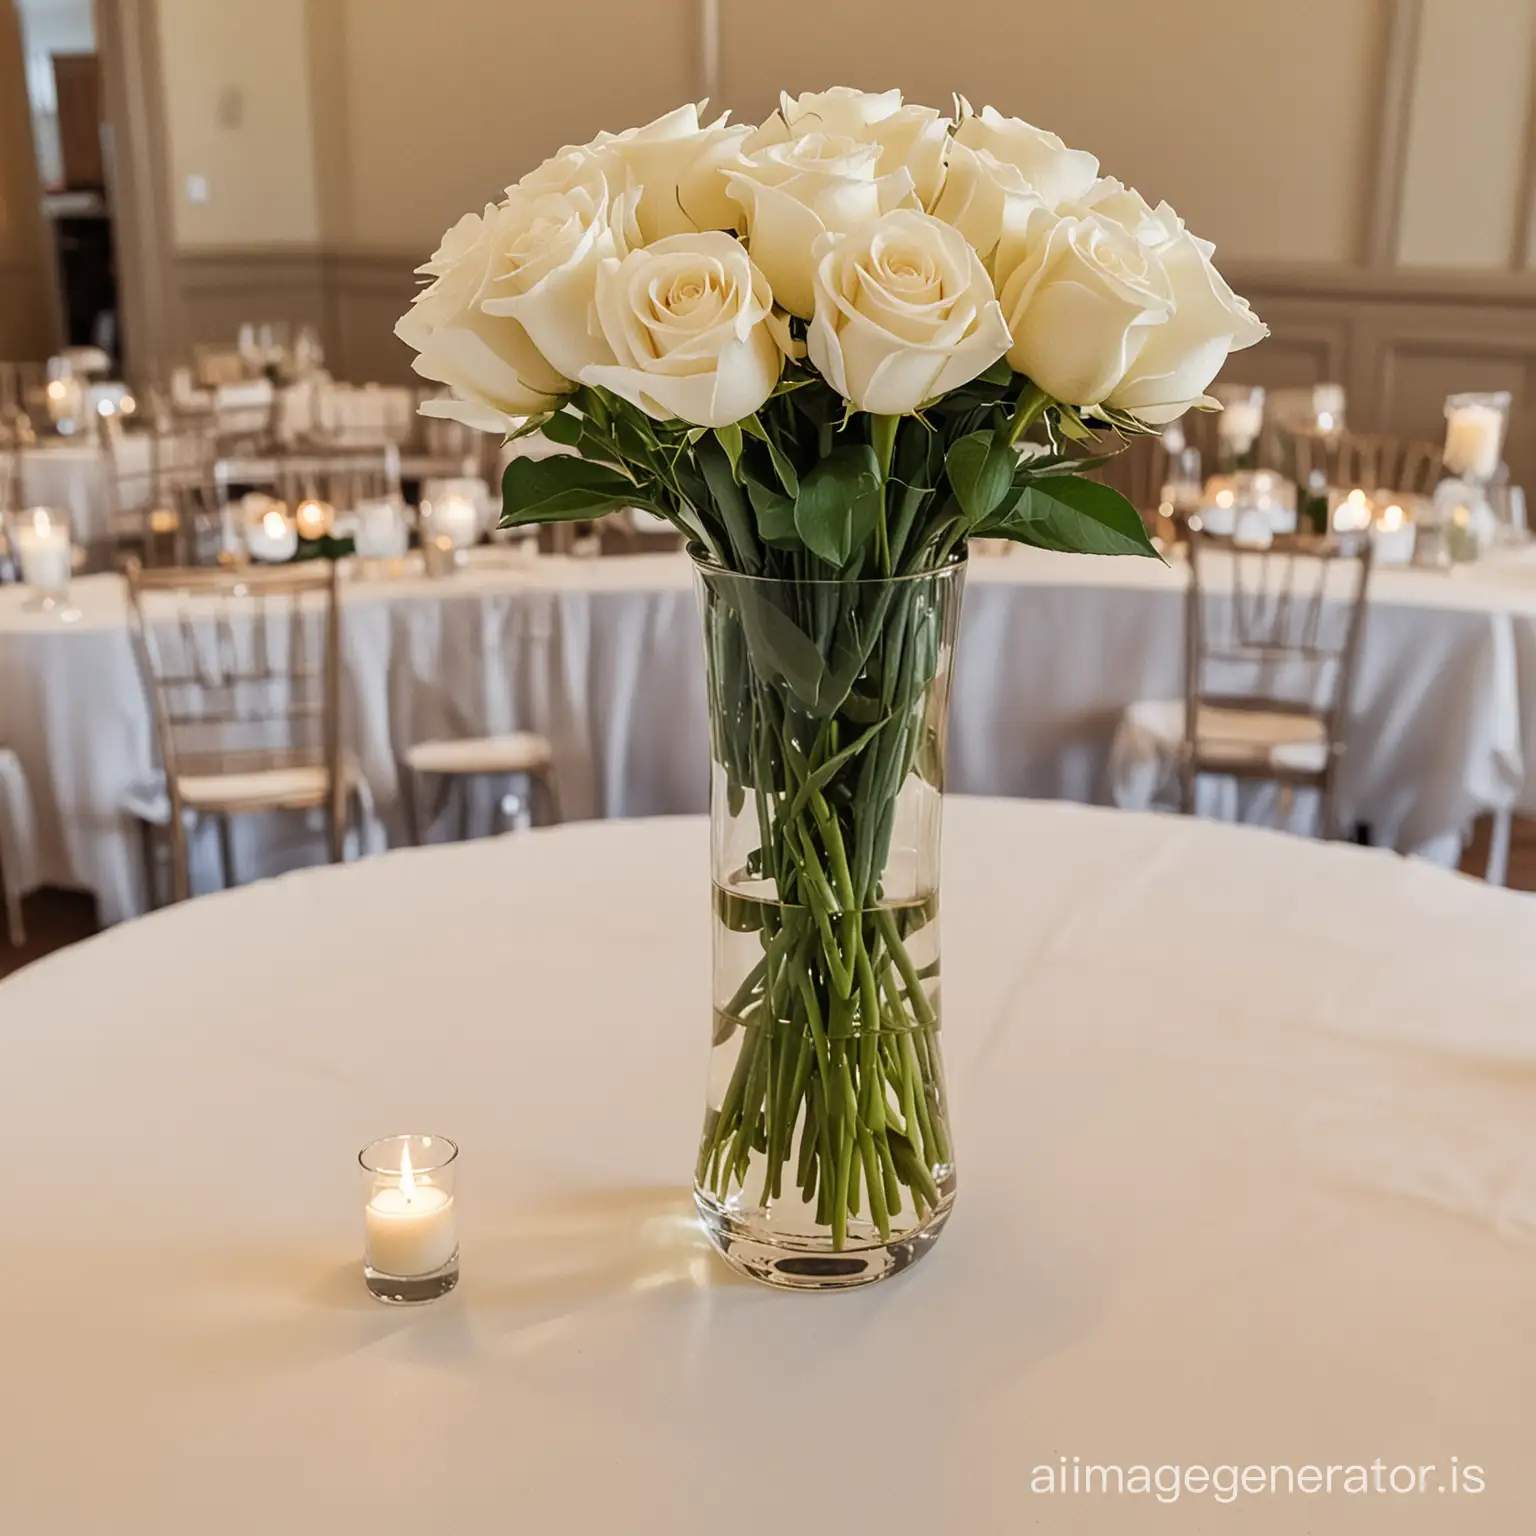 Elegant-Wedding-Reception-with-White-Roses-Centerpiece